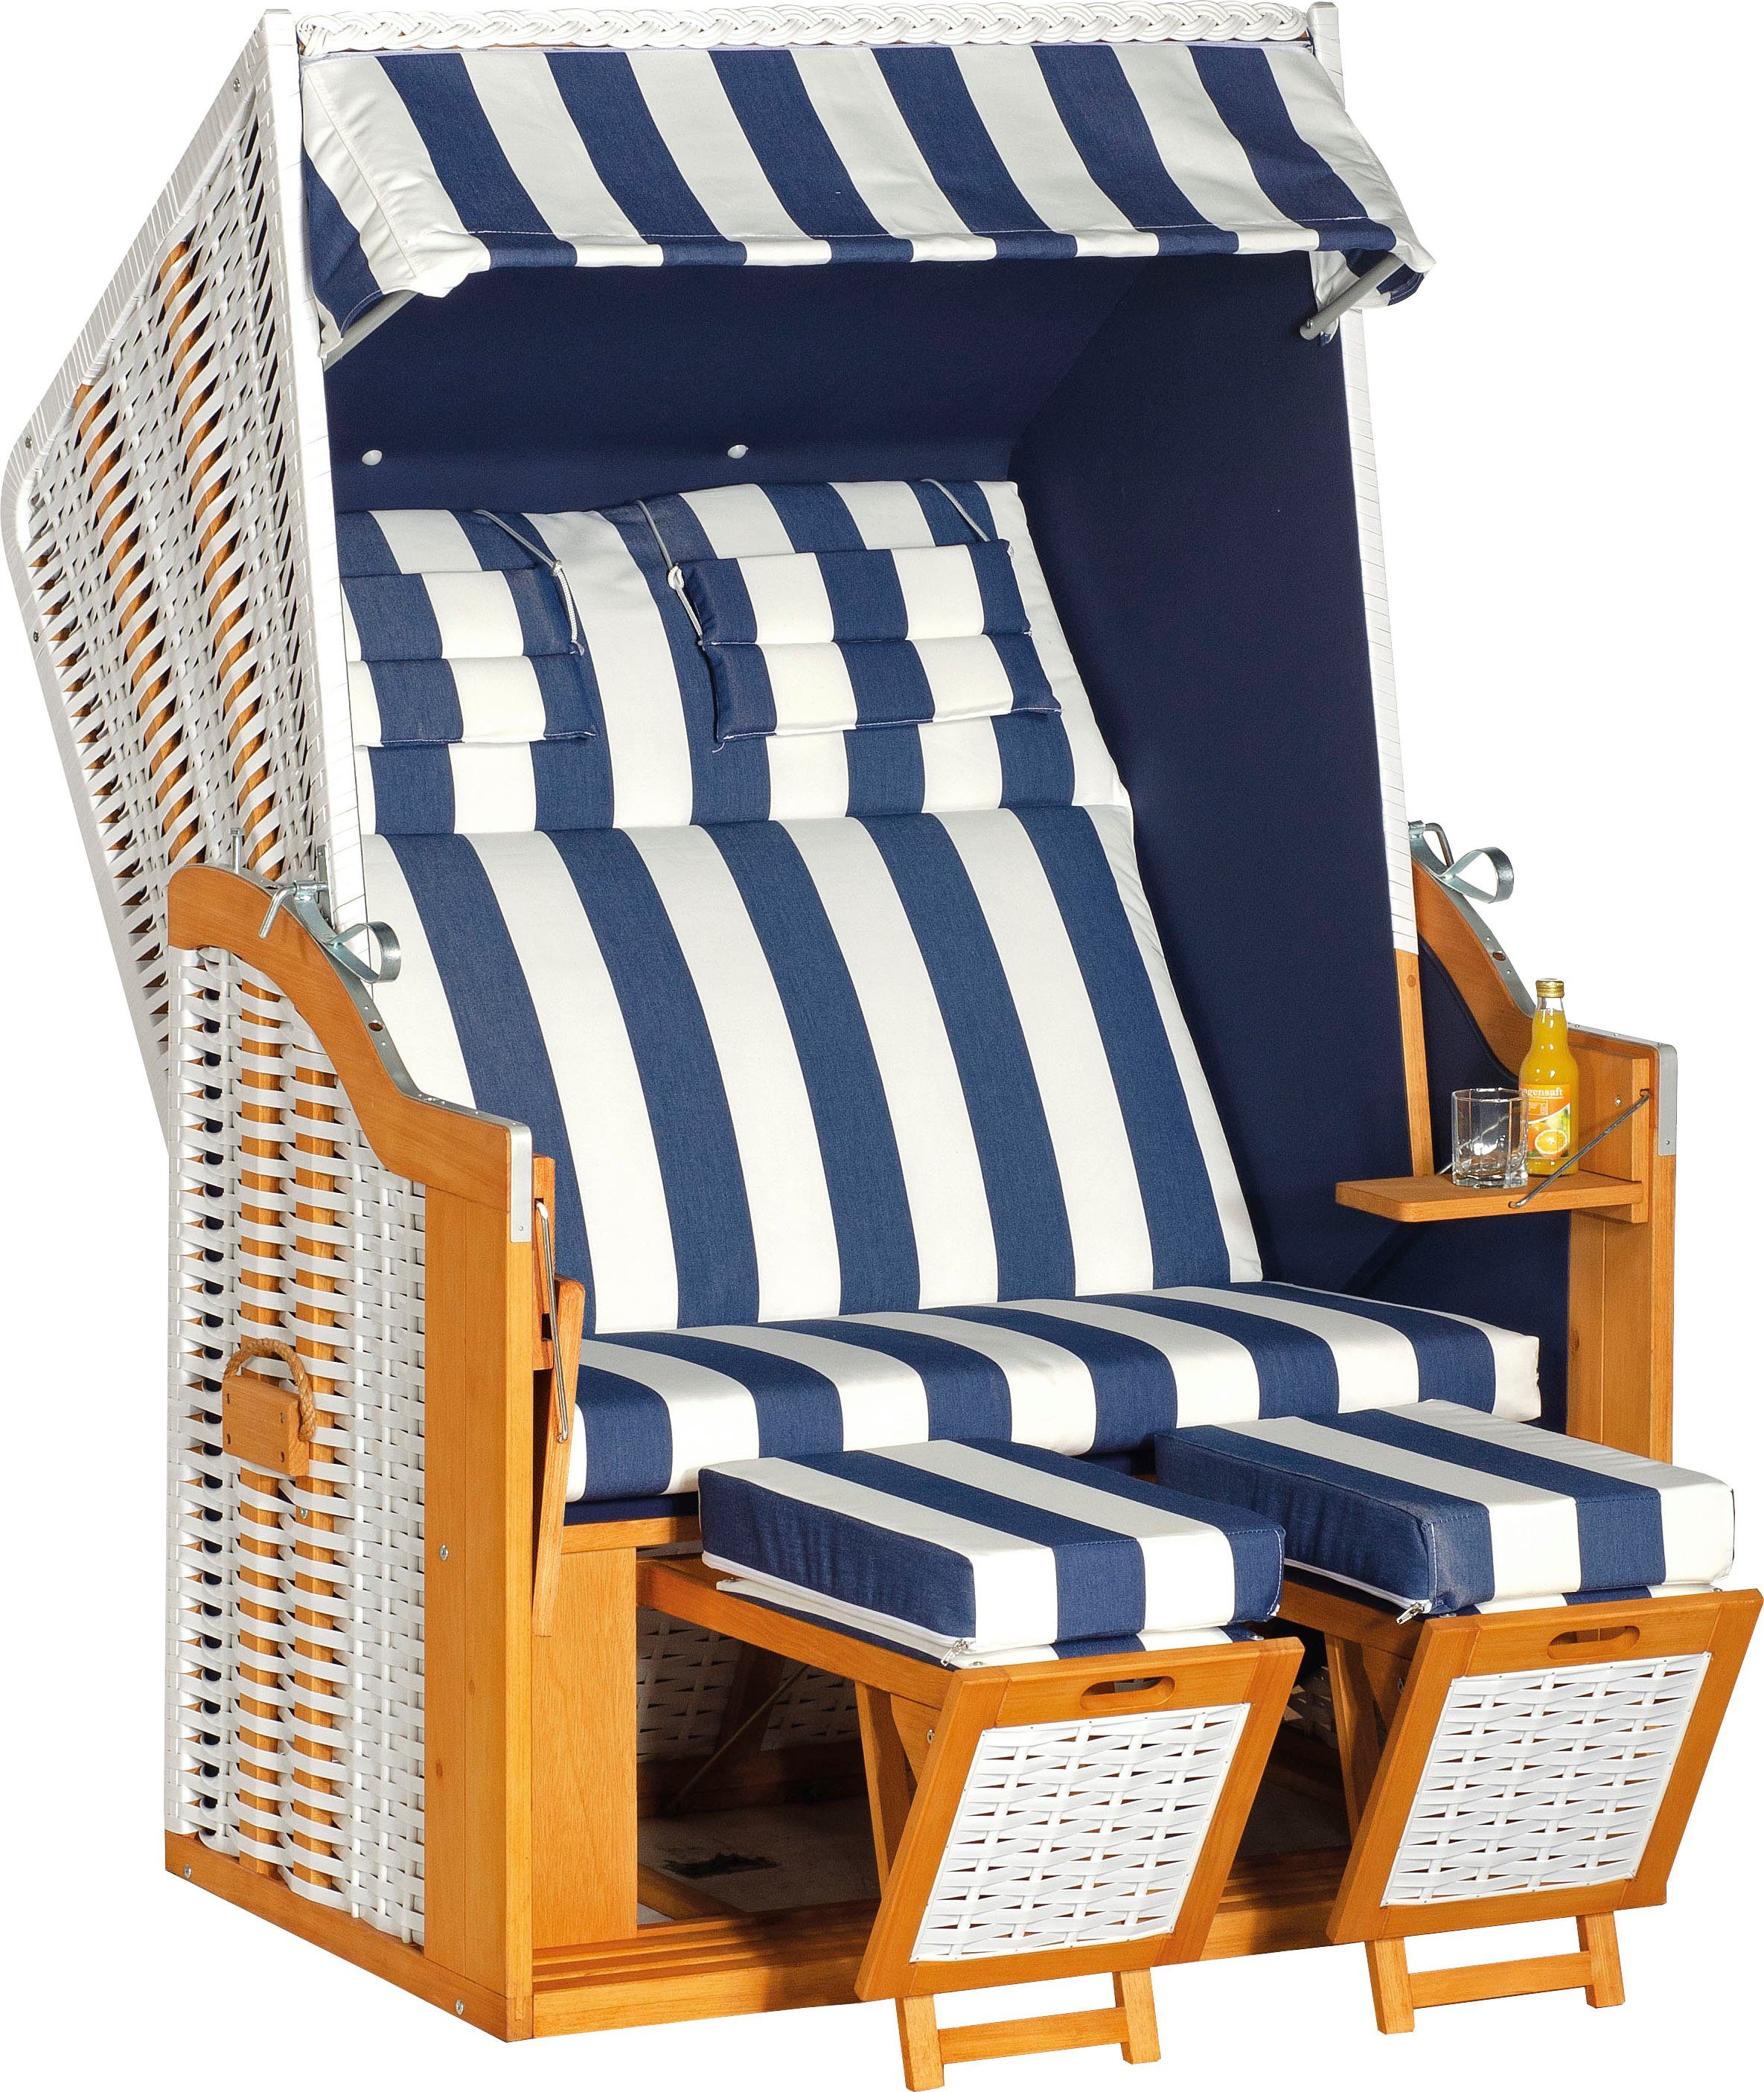 2-Sitzer, Rustikal Strandkorb 34 BxTxH: Selbstaufbau Ostsee-Modell, Halblieger, 125x80x160 cm, SunnySmart Z, zum